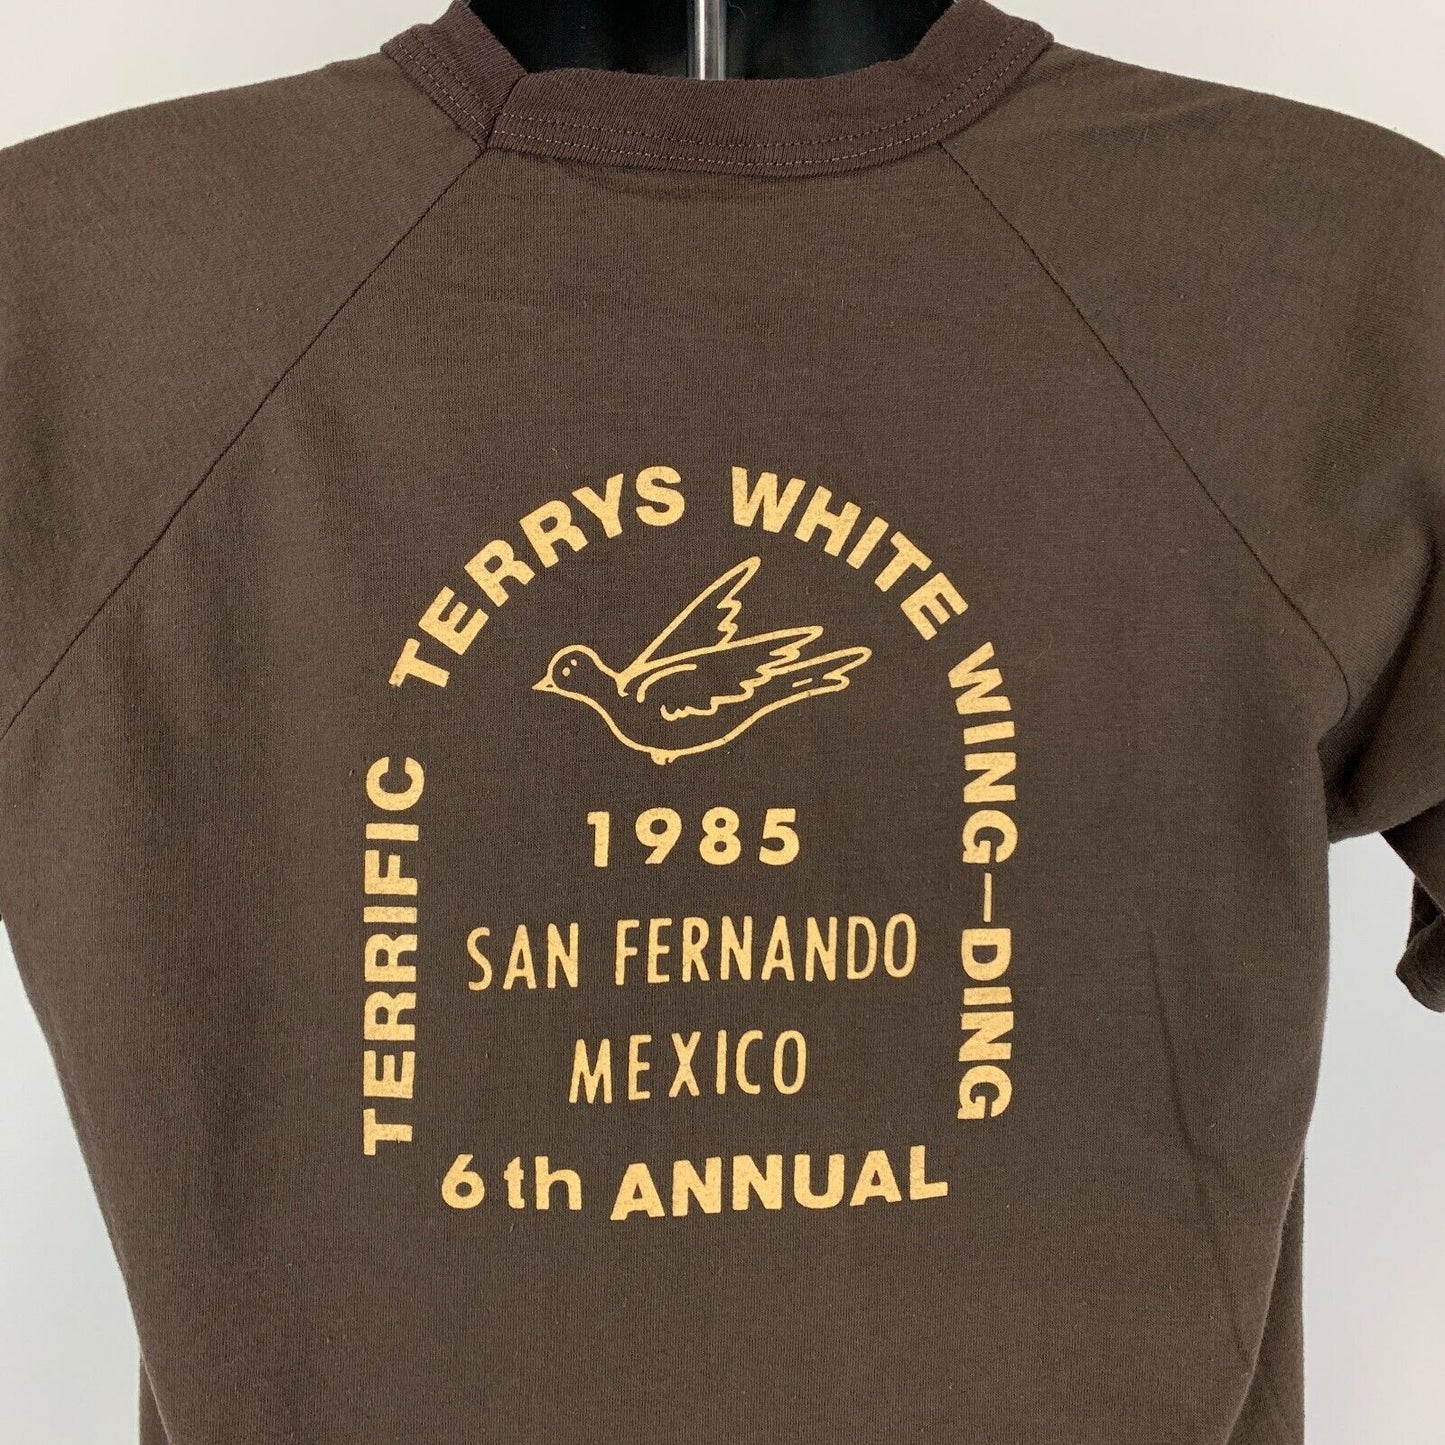 Terrific Terrys White Wing Ding Vintage 80s T Shirt Small San Fernando Mexico